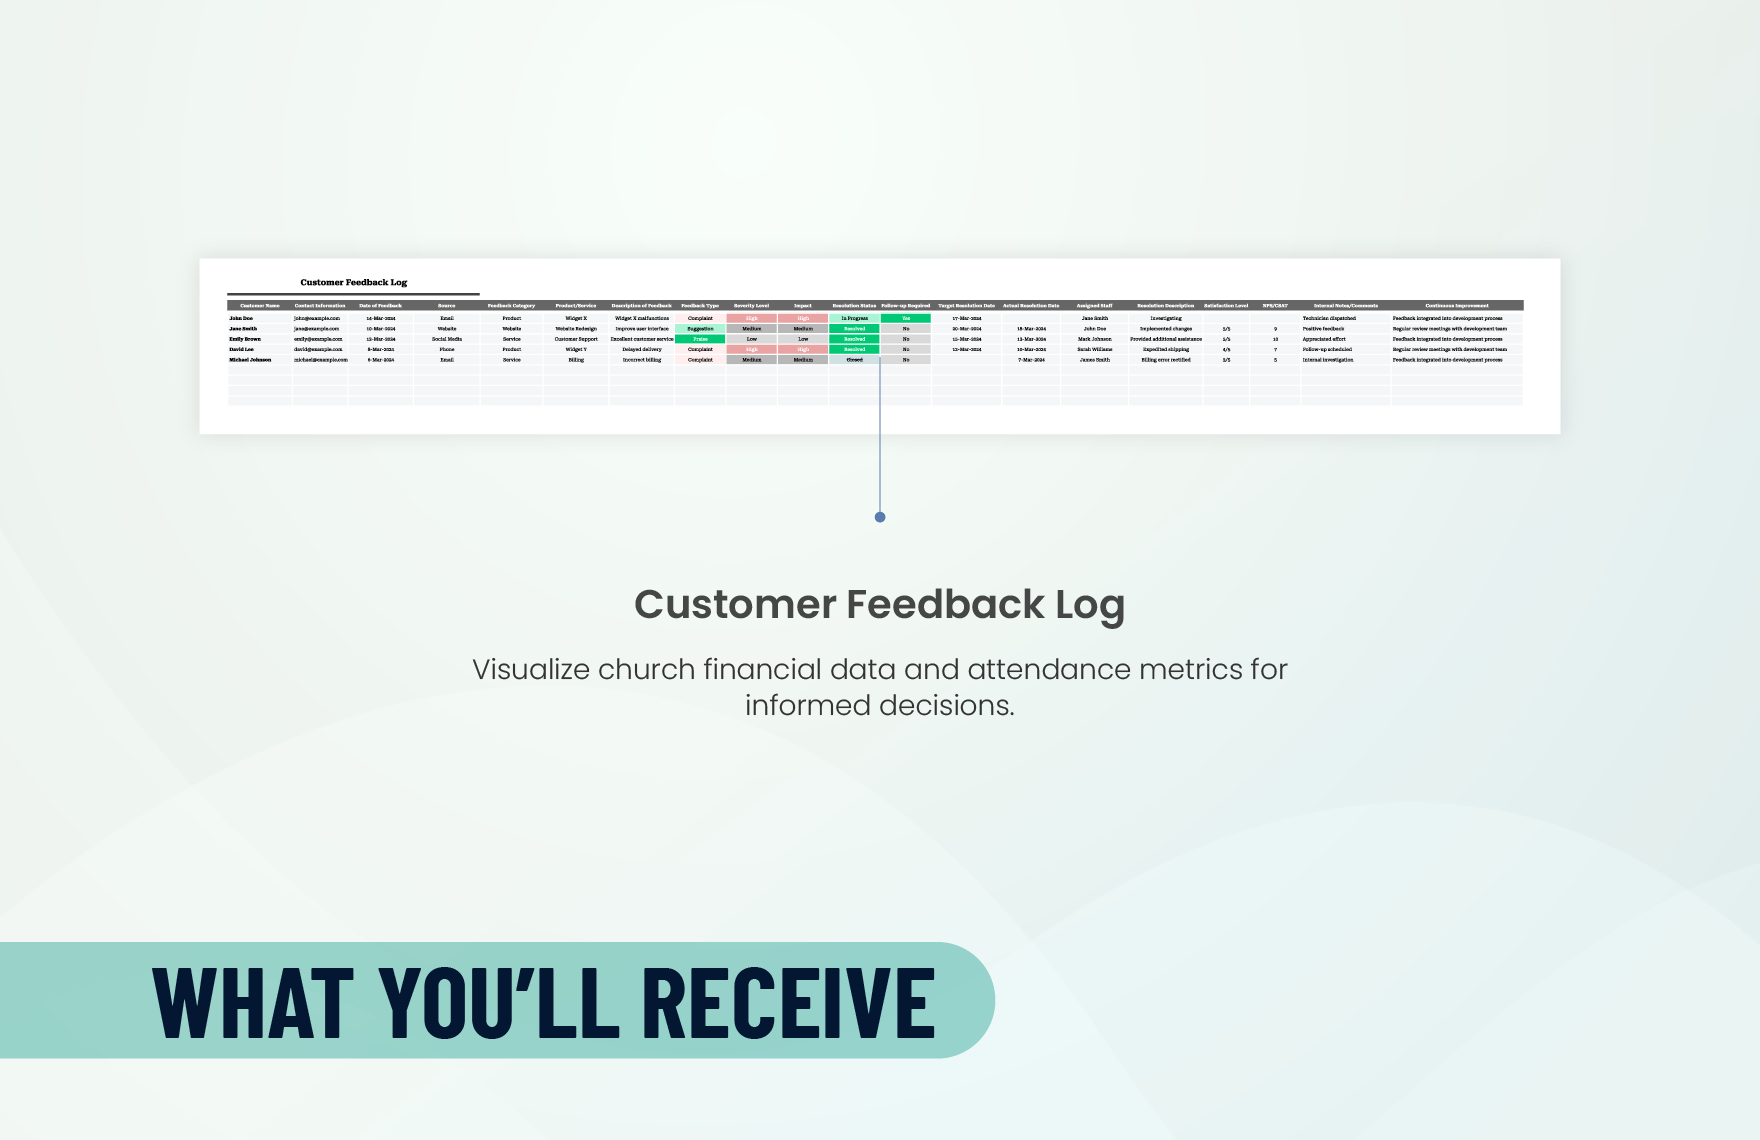 Customer Feedback Tracker Template